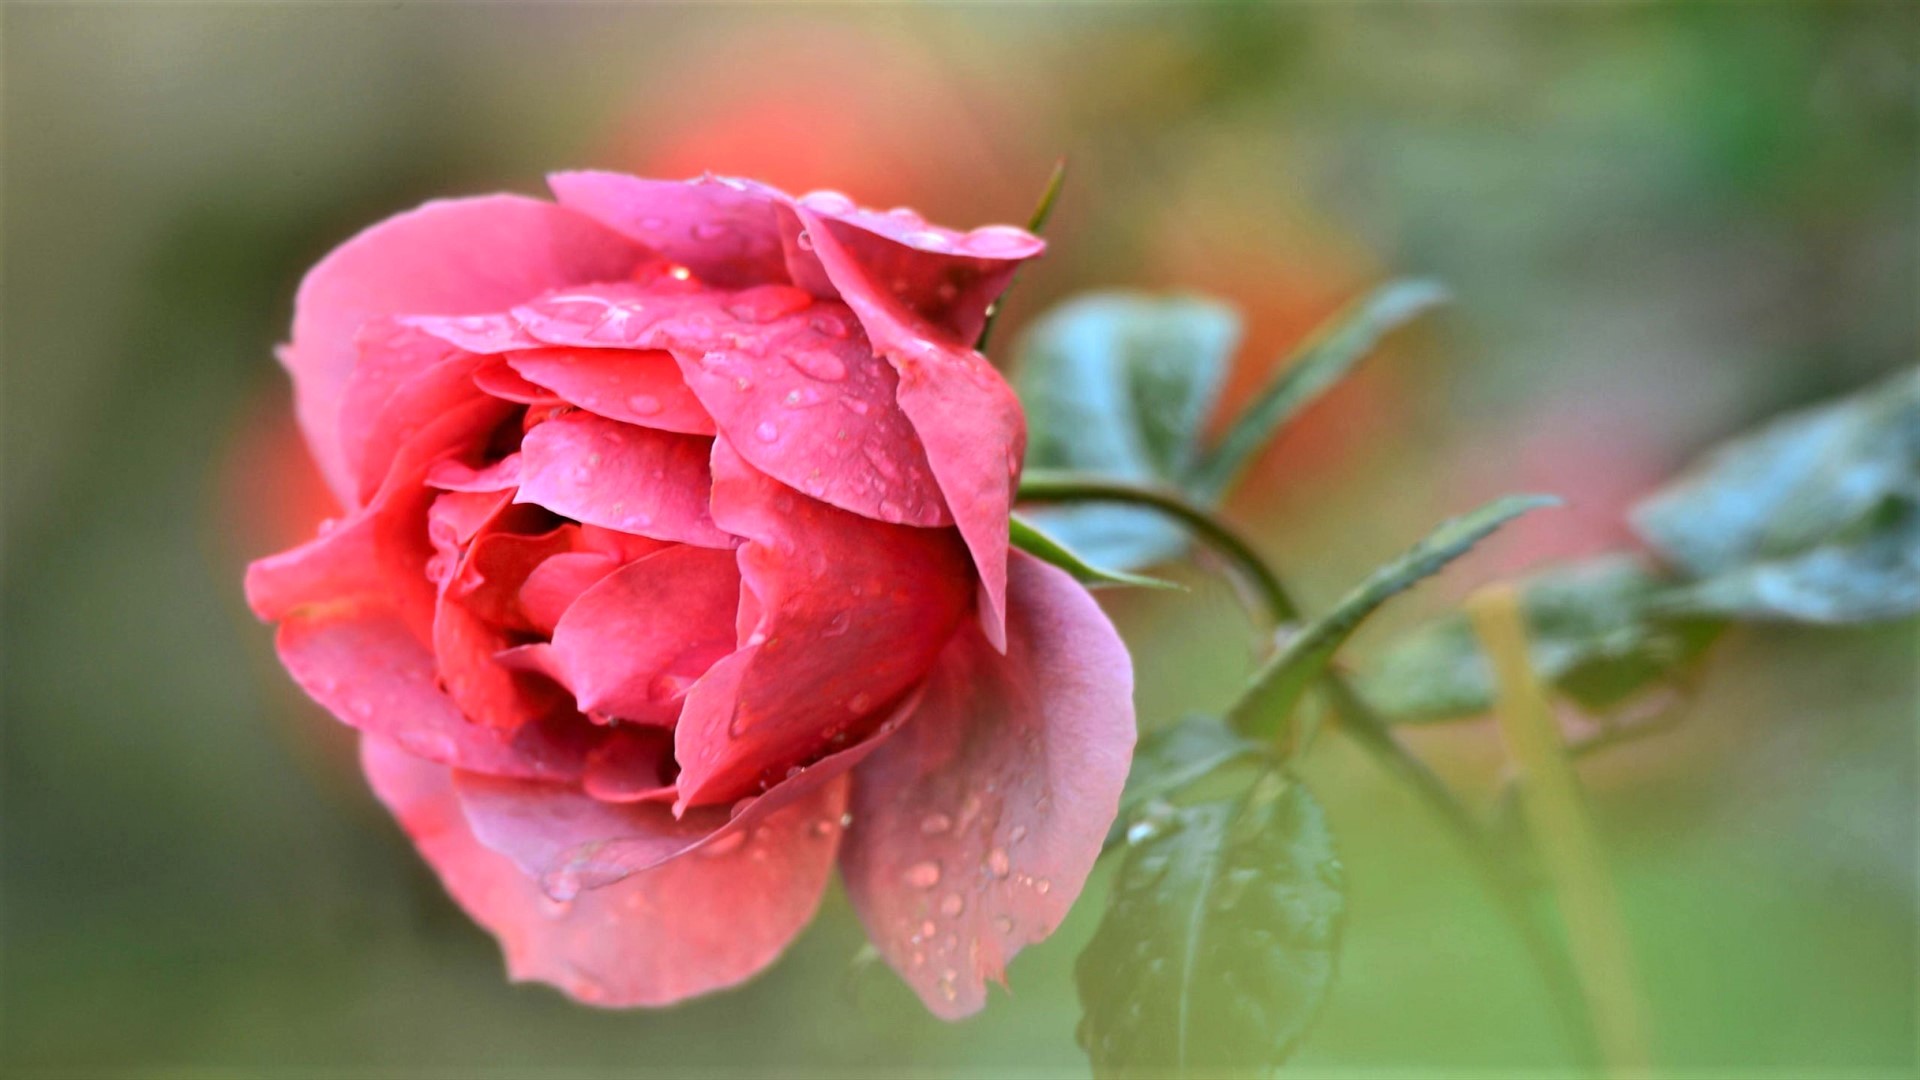 Descarga gratis la imagen Flores, Rosa, Flor, Tierra/naturaleza, Gota De Agua, Rosa Rosada en el escritorio de tu PC